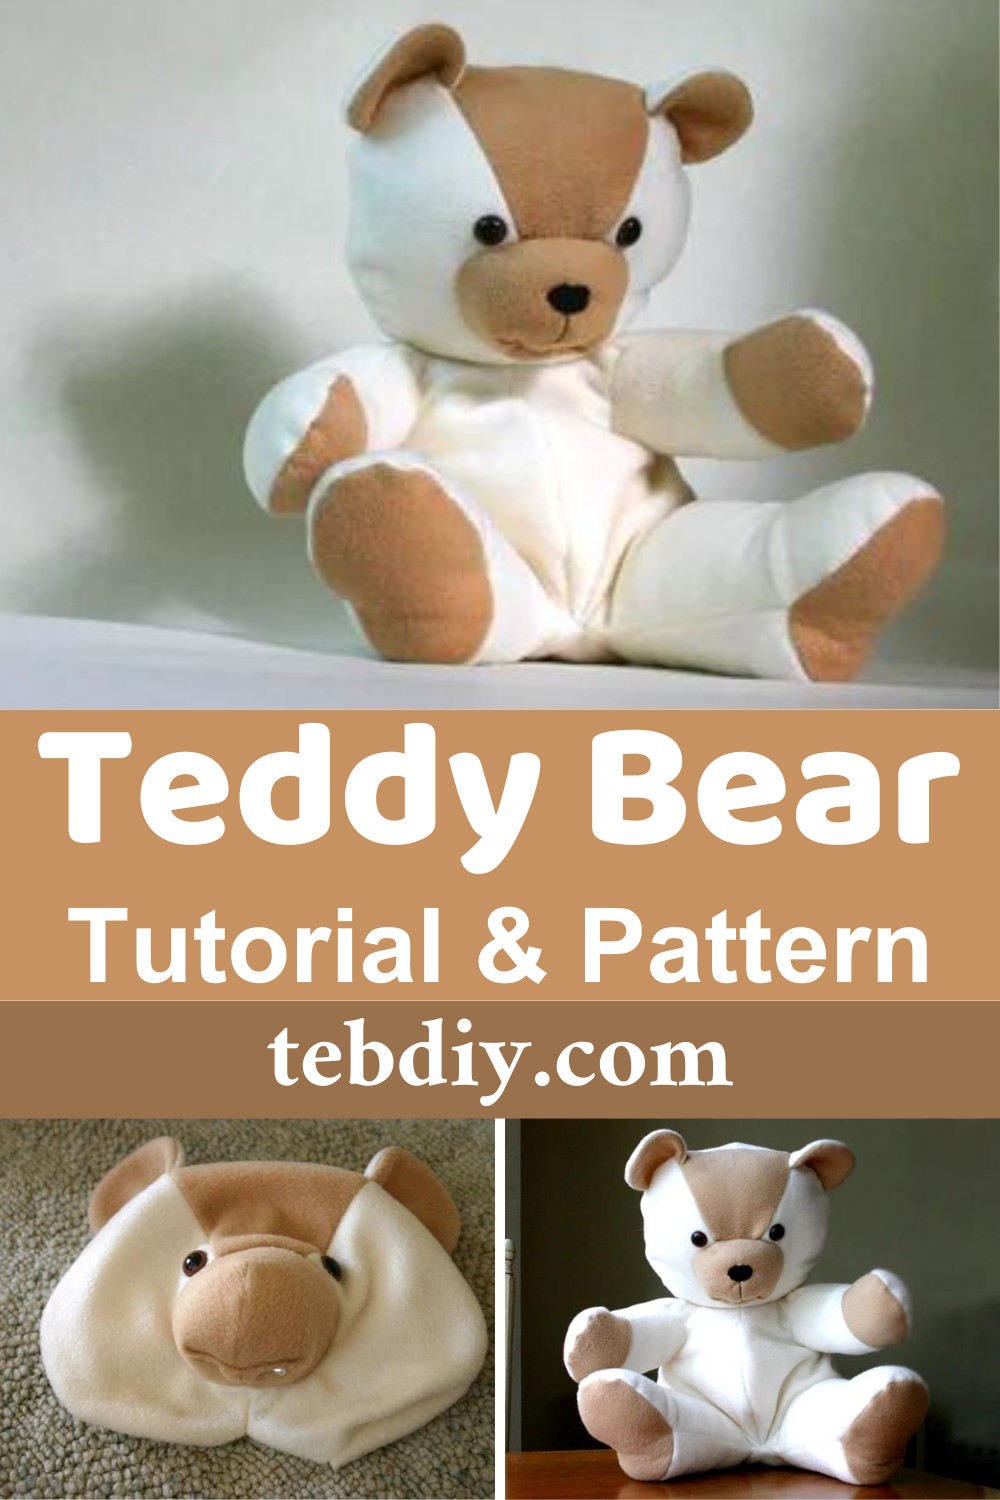 Teddy Bear Tutorial And Pattern